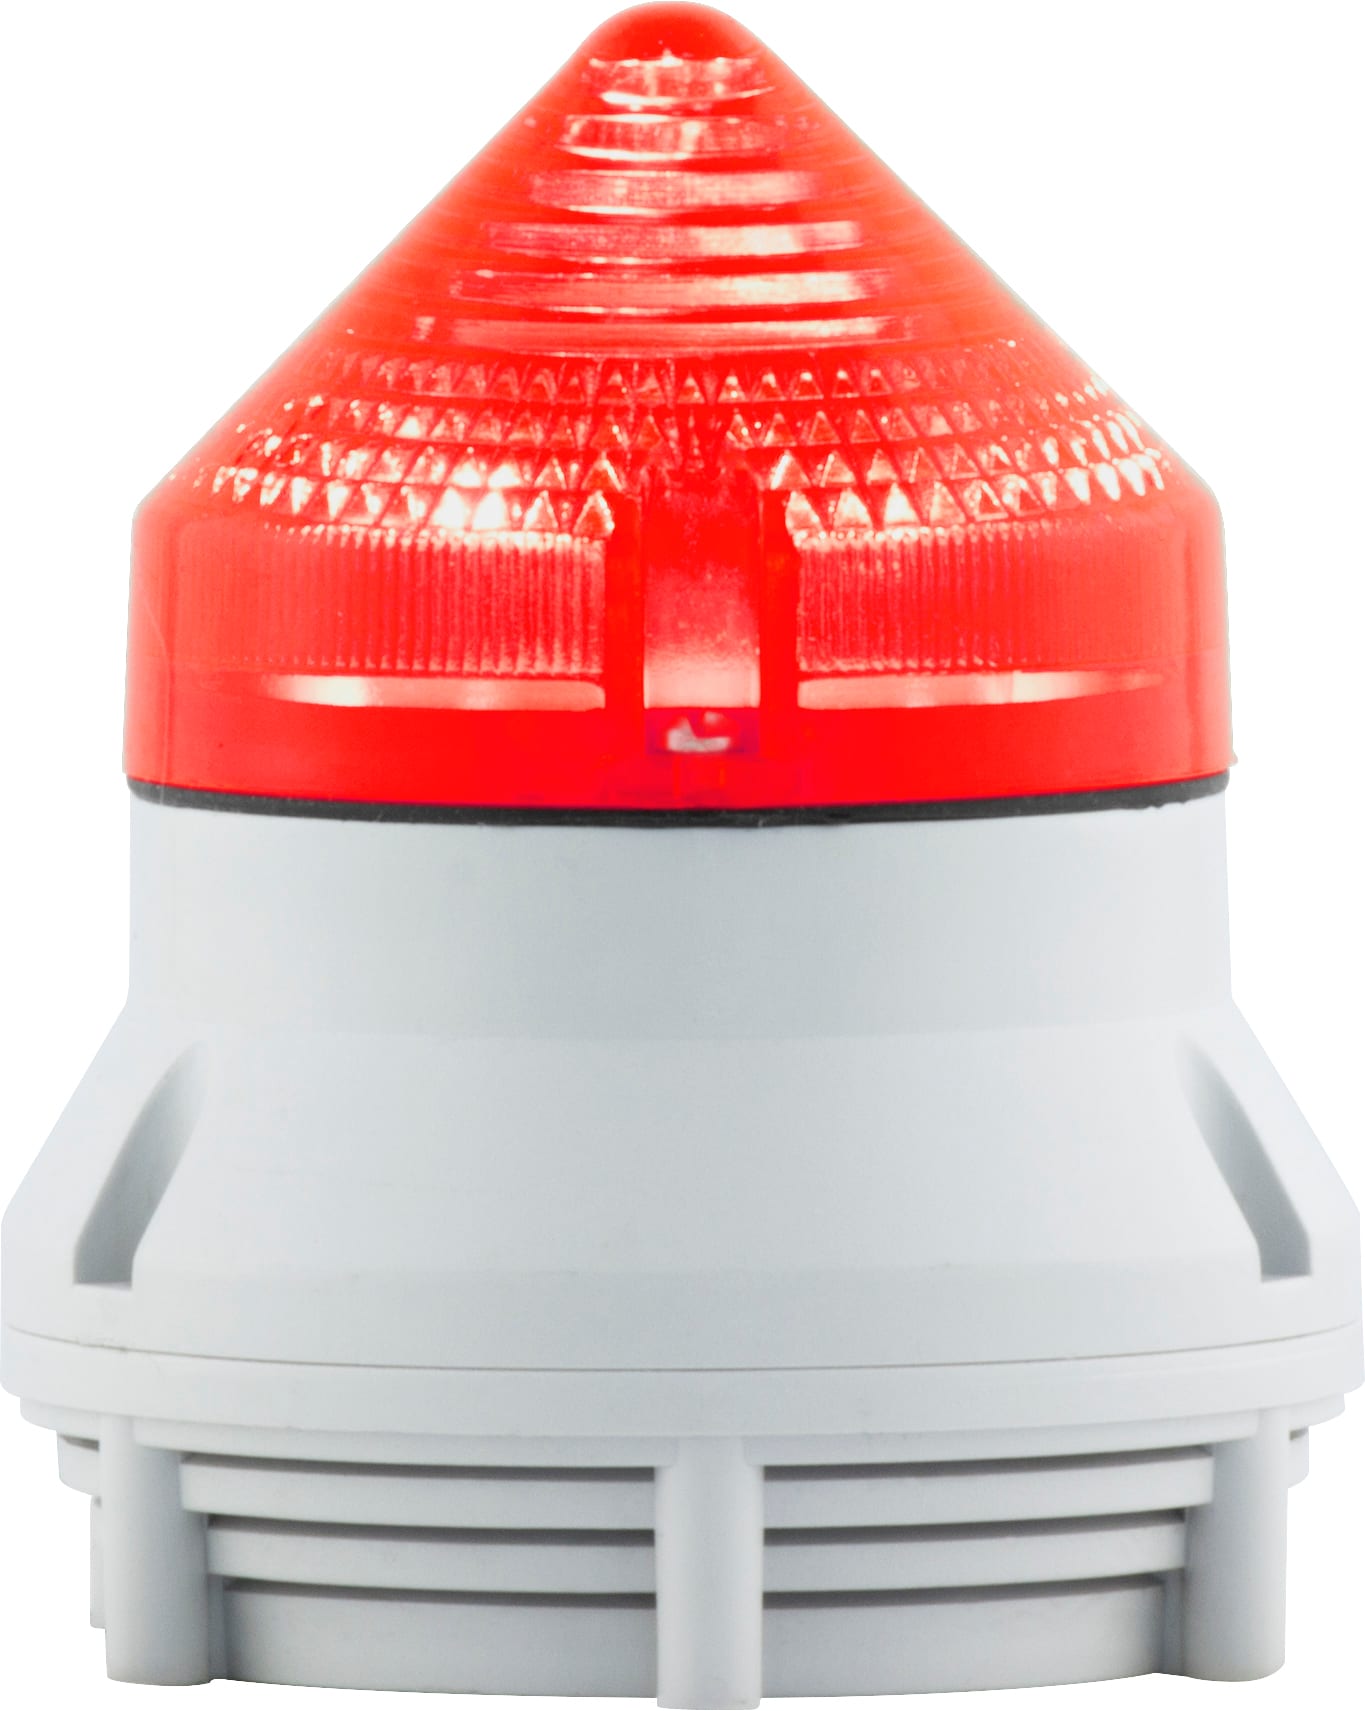 SIRENA - CTL600 LED Acoustique fixe/clignotant son continu/pulsé 68db IP30   diam 60mm